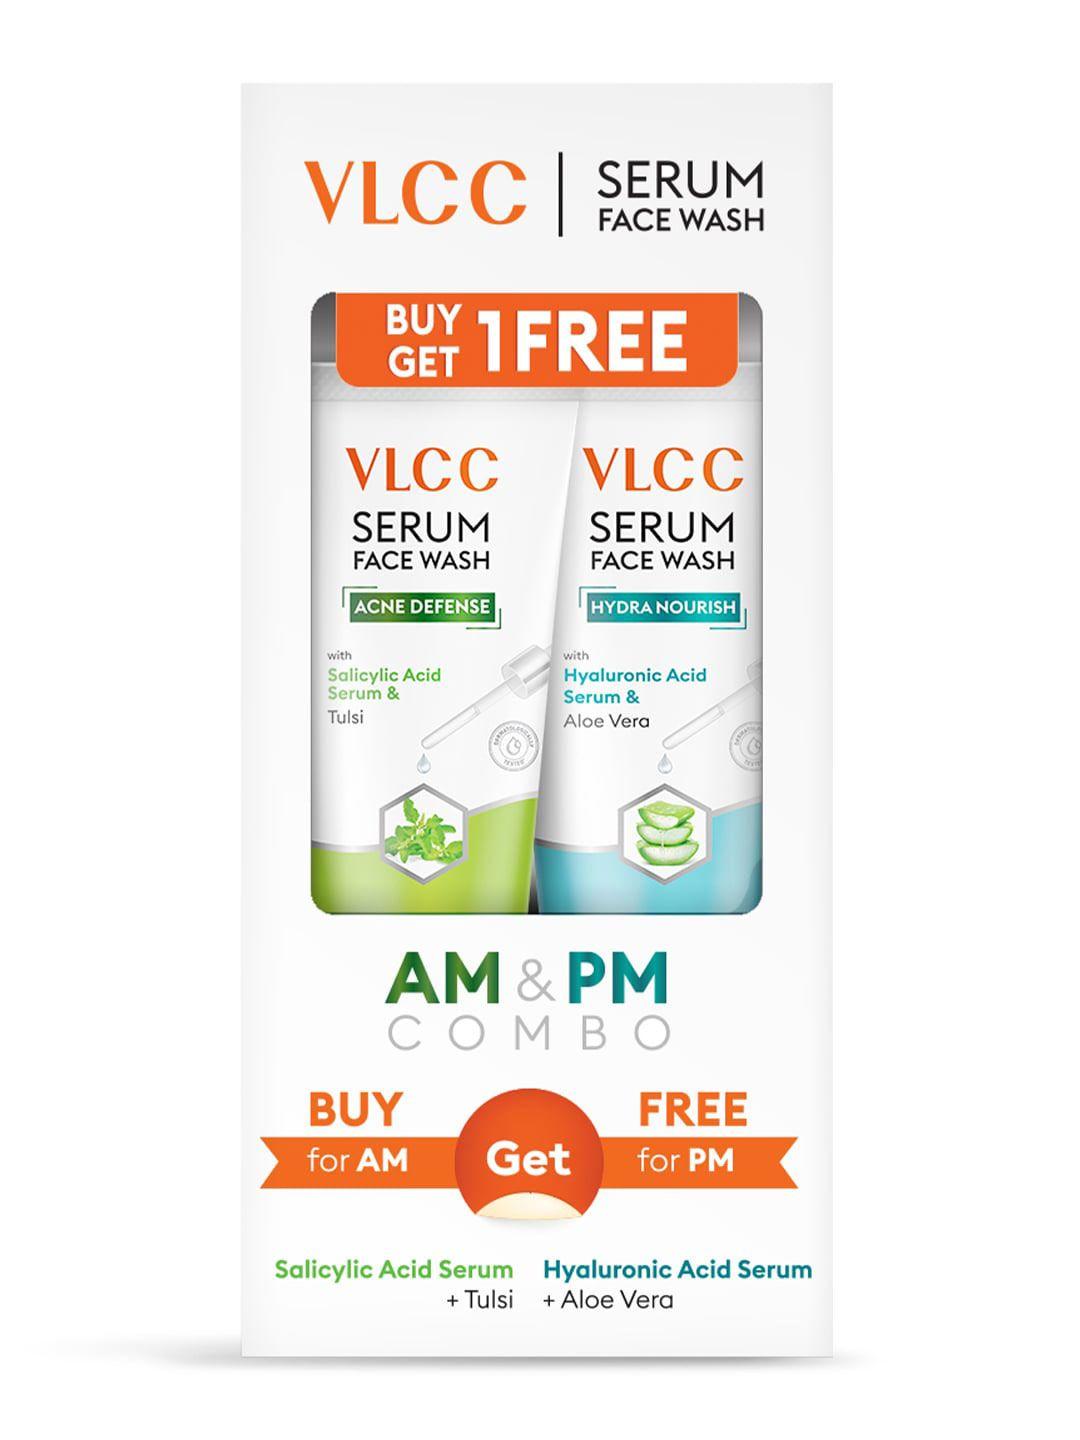 vlcc 2-pcs acne defense & hydra nourish serum face wash - 100ml each